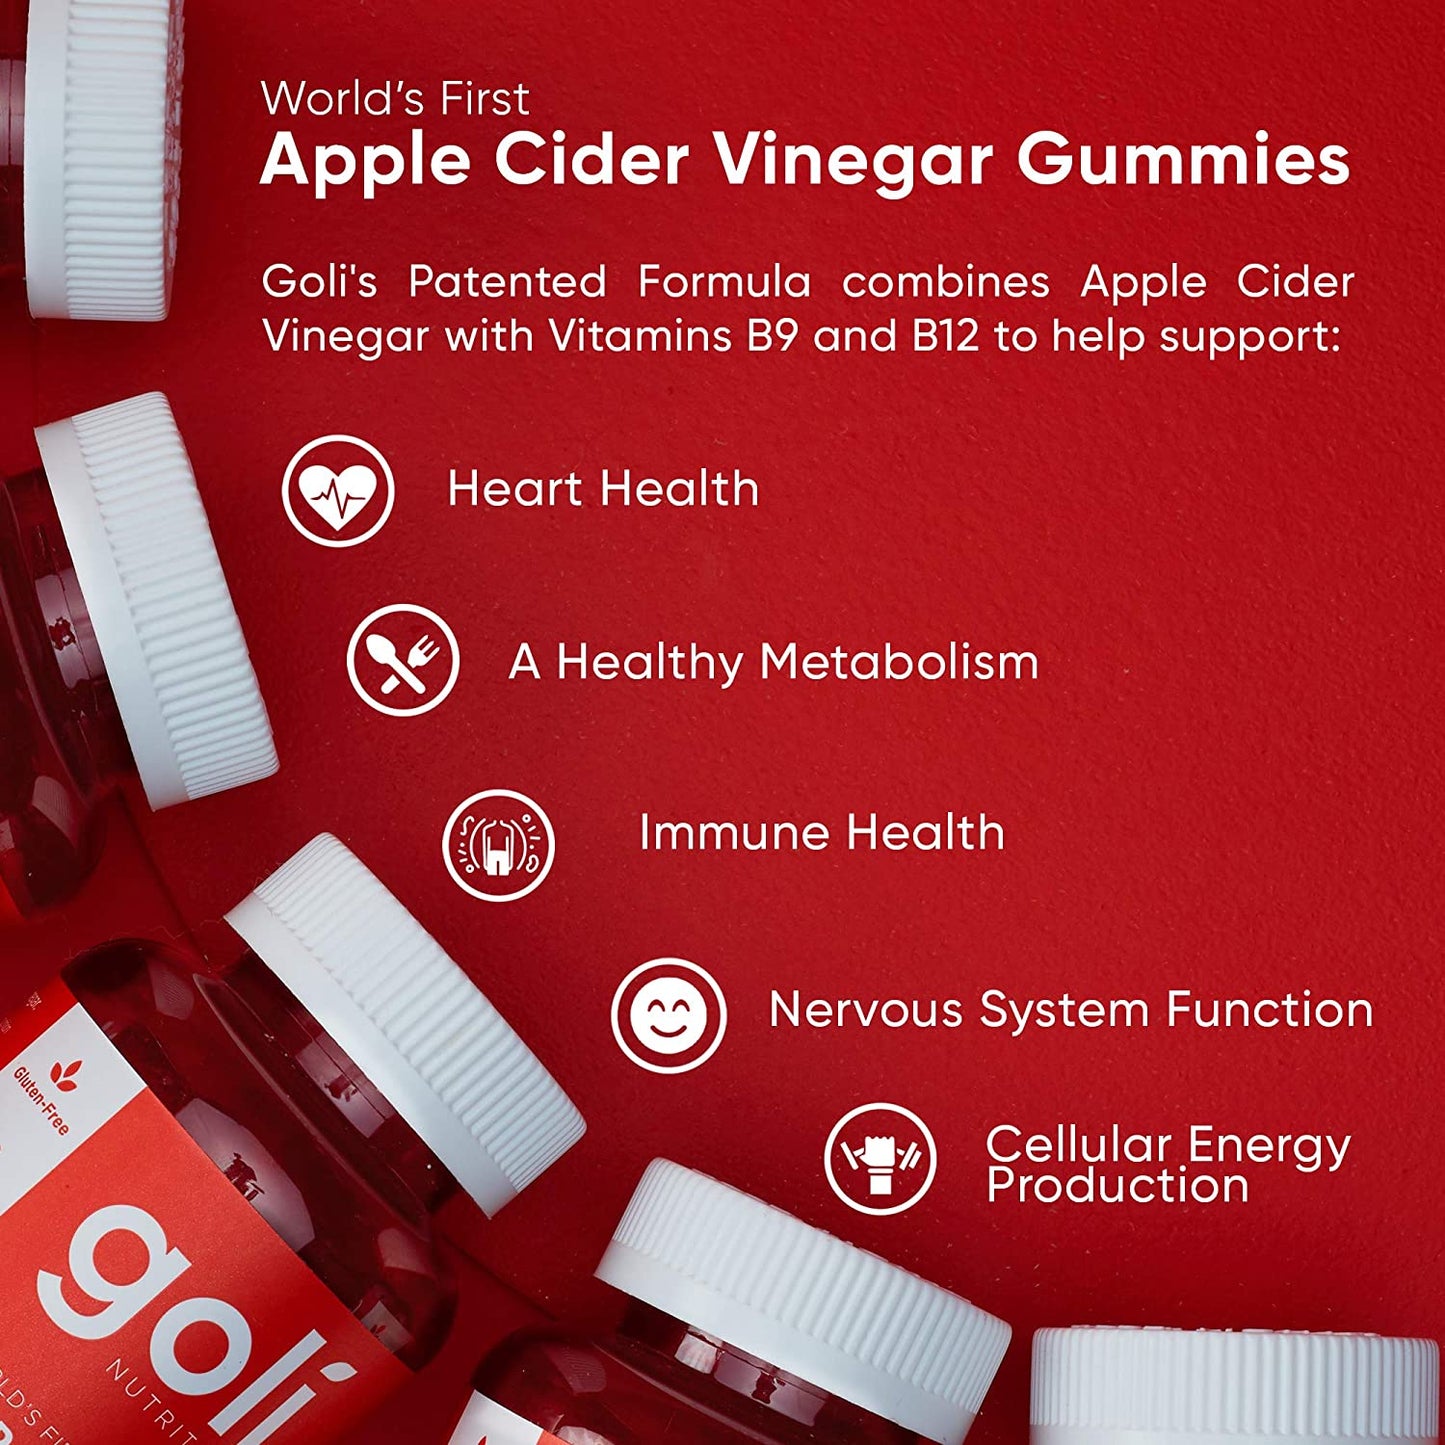 Goli Nutrition Gummies 60 Pieces, Apple Cider Vinegar